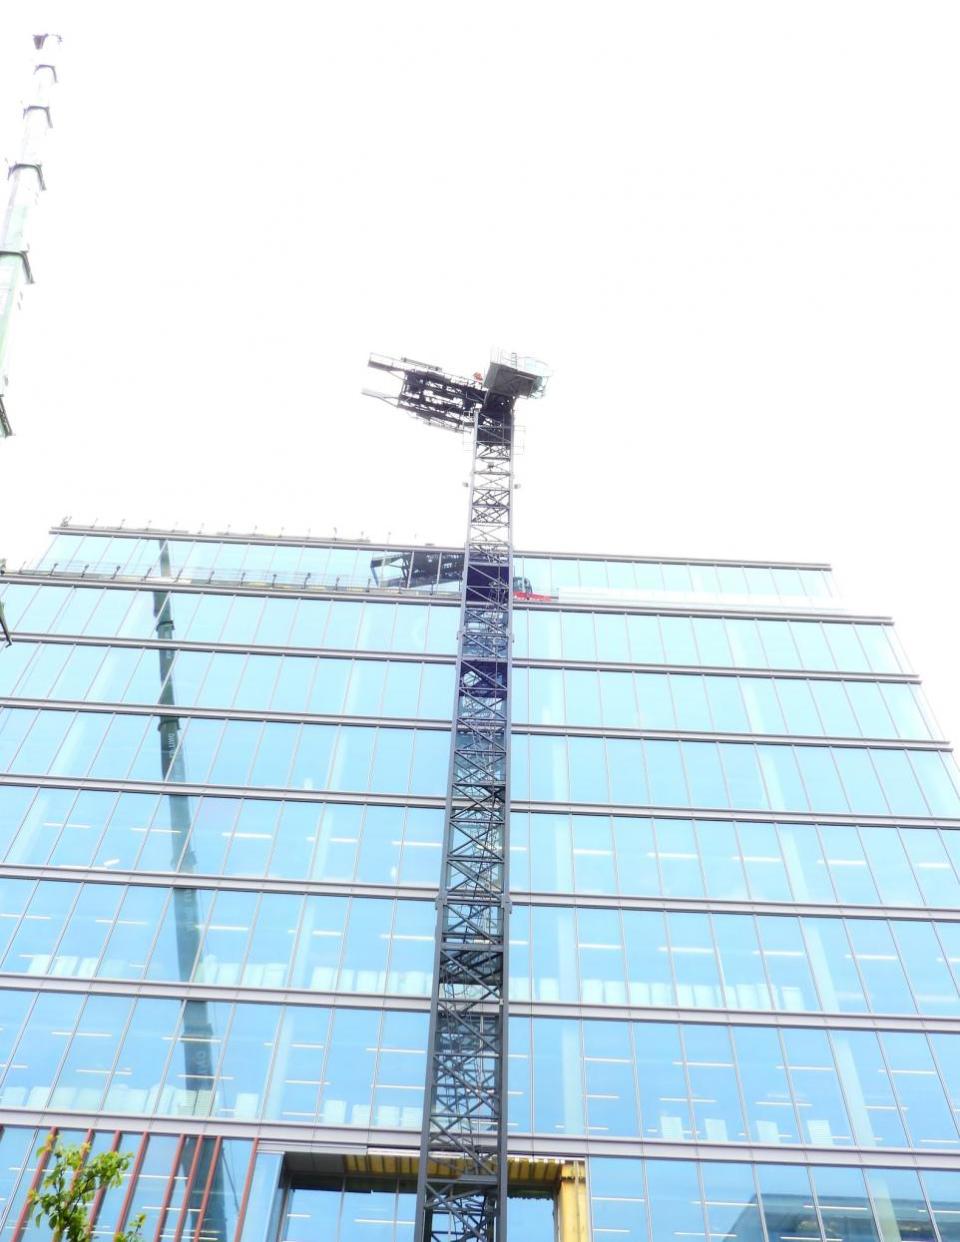 Watford Observer: The tower crane.